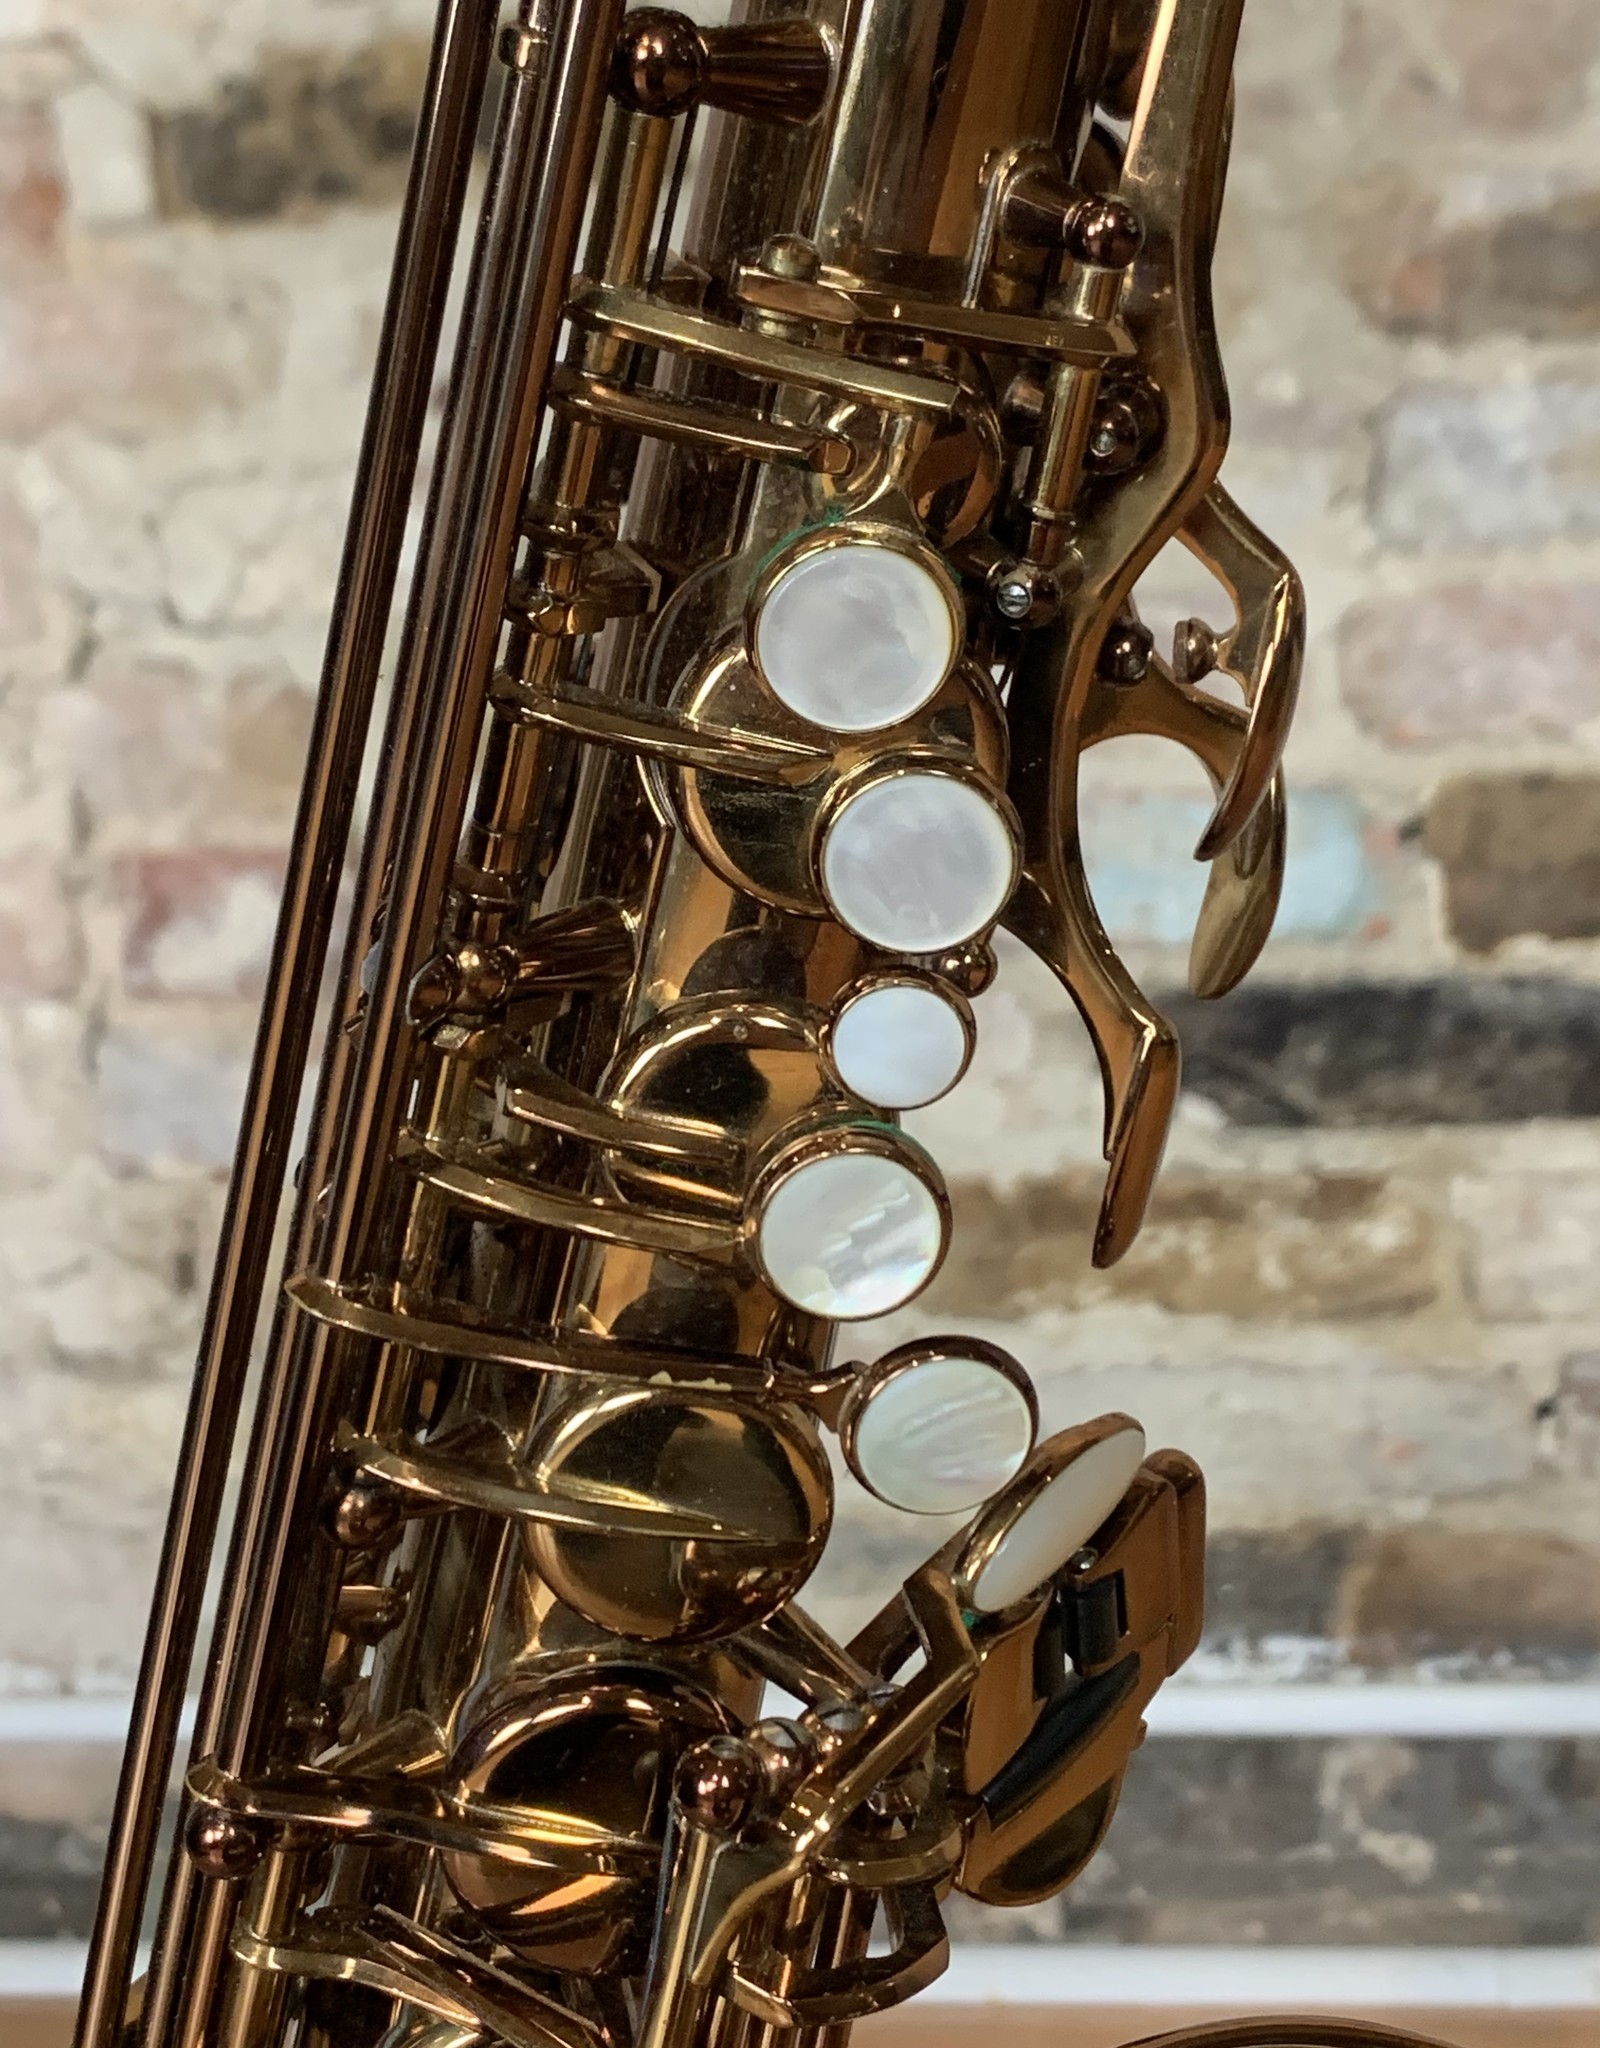 Ishimori Ishimori Woodstone VL Alto Saxophone with high F# key great condition pre owned!